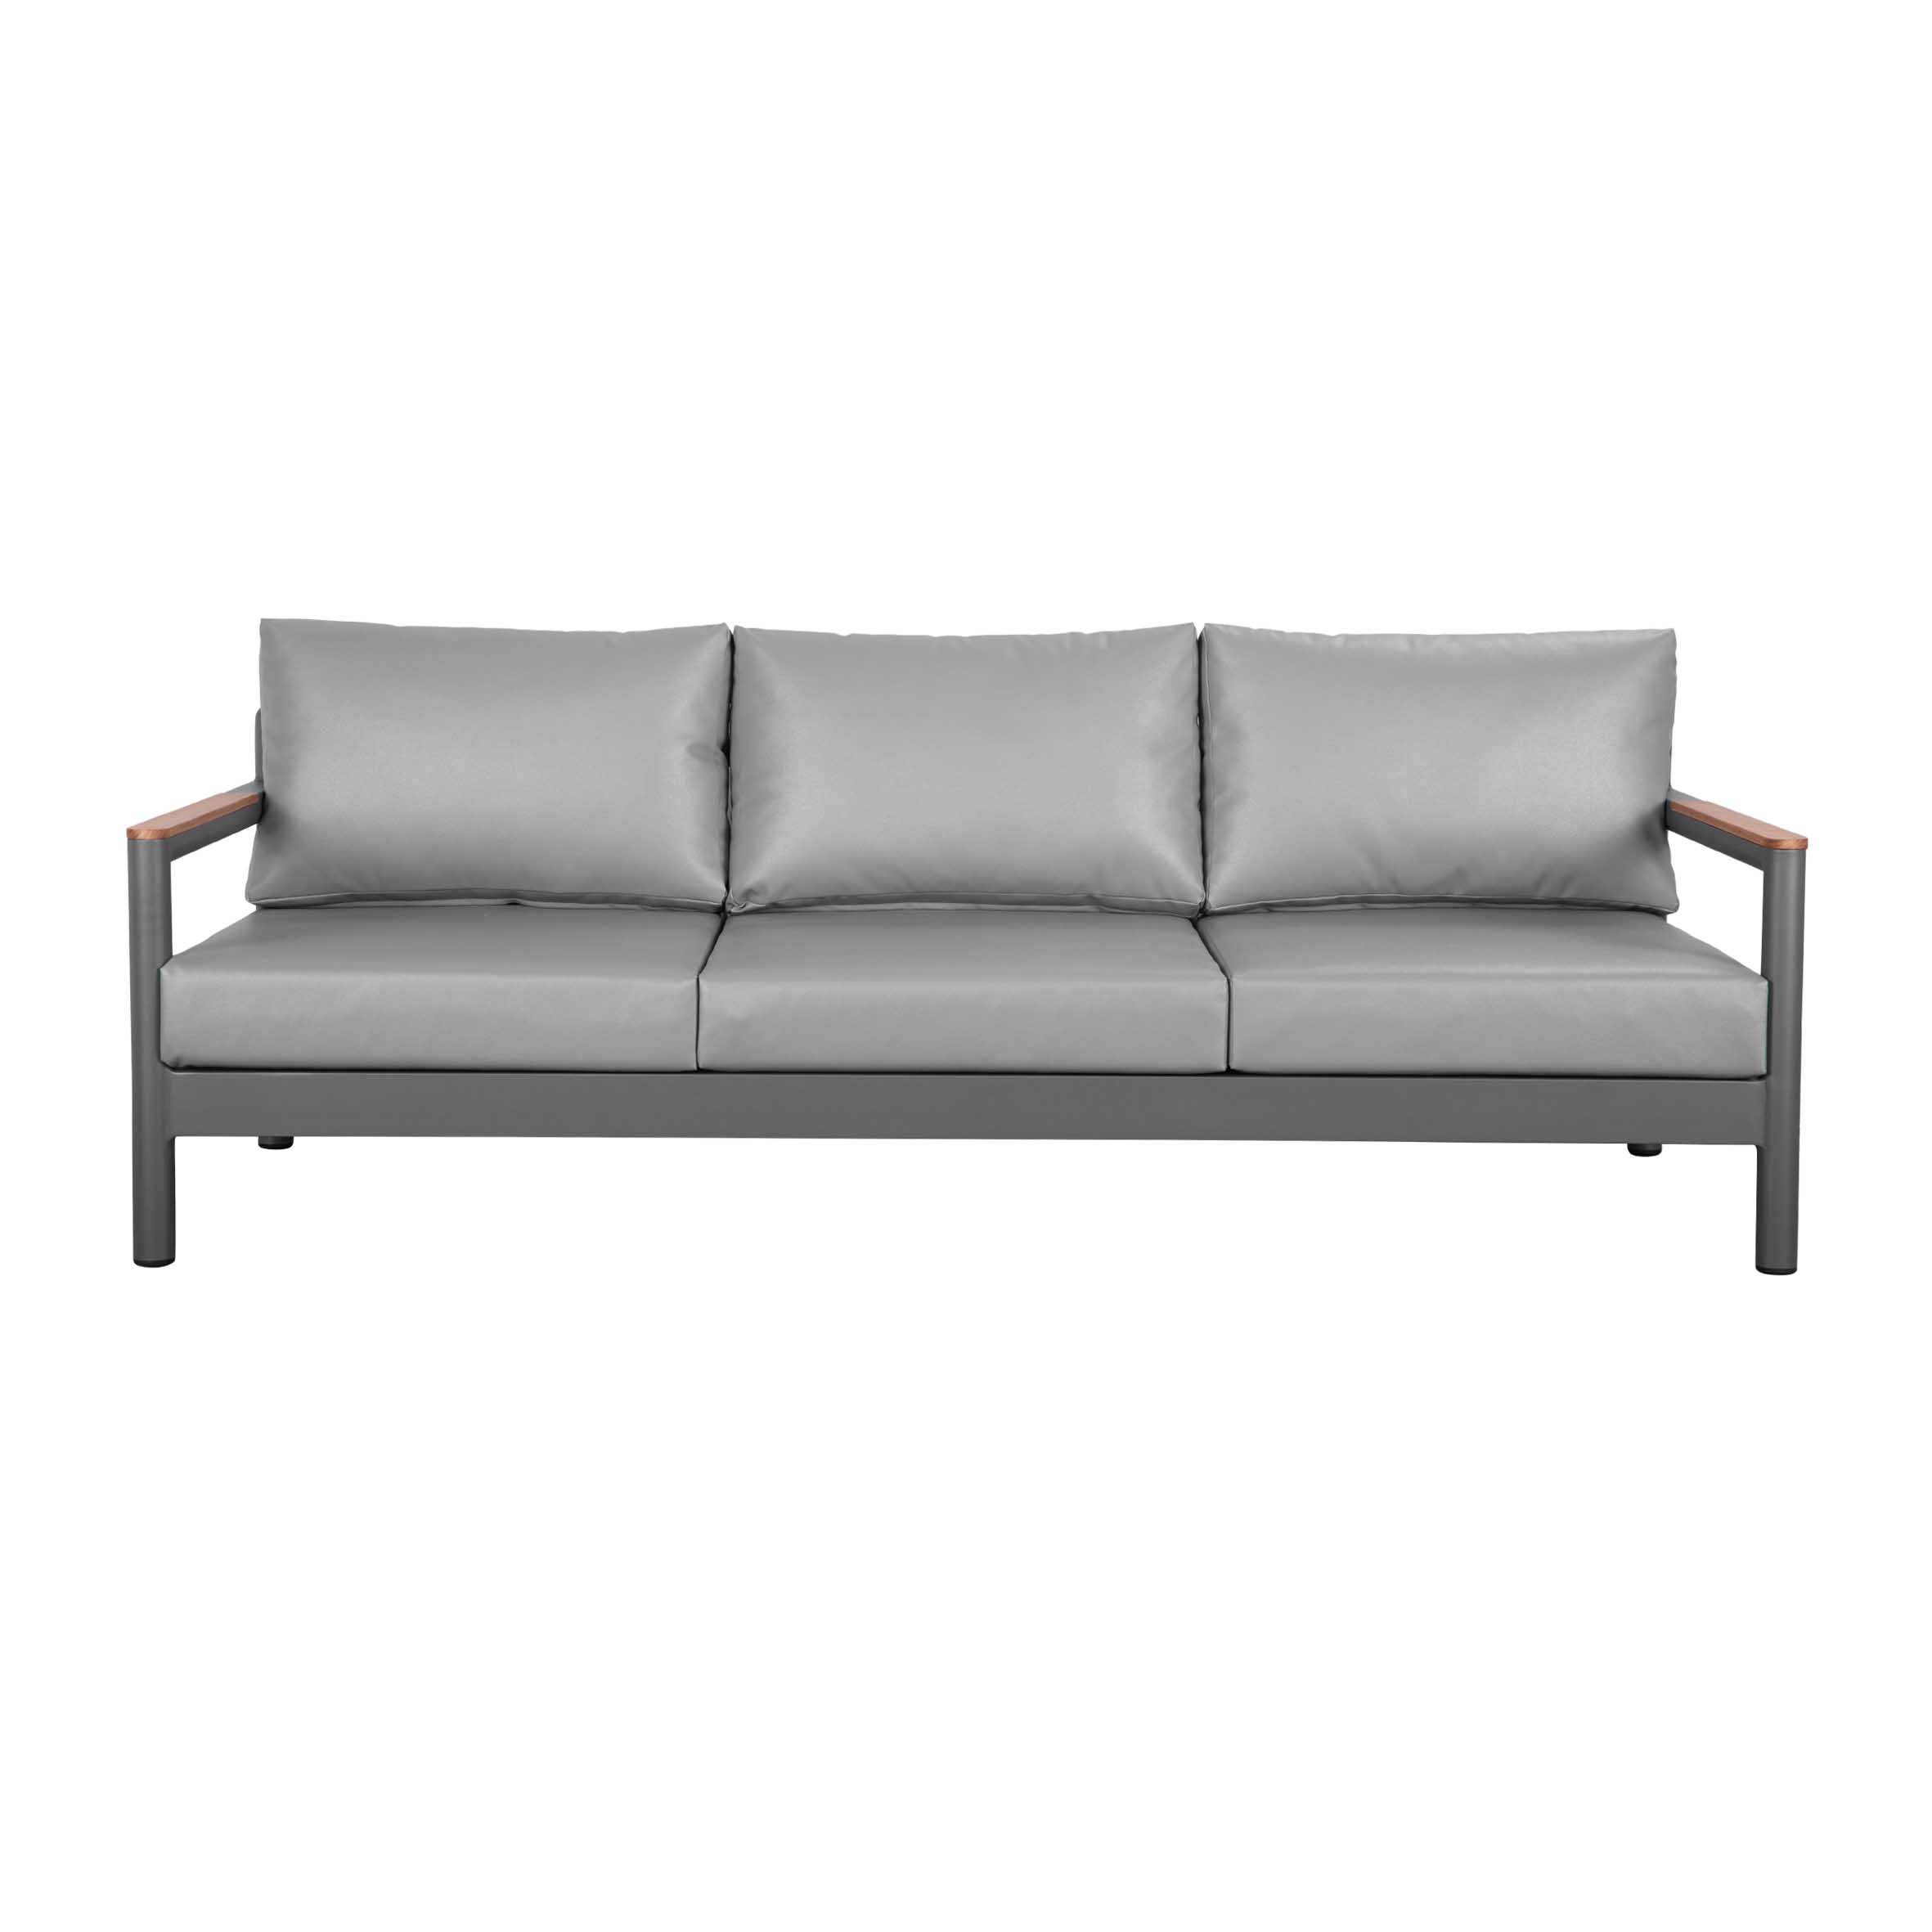 Armani 3-seat sofa S2